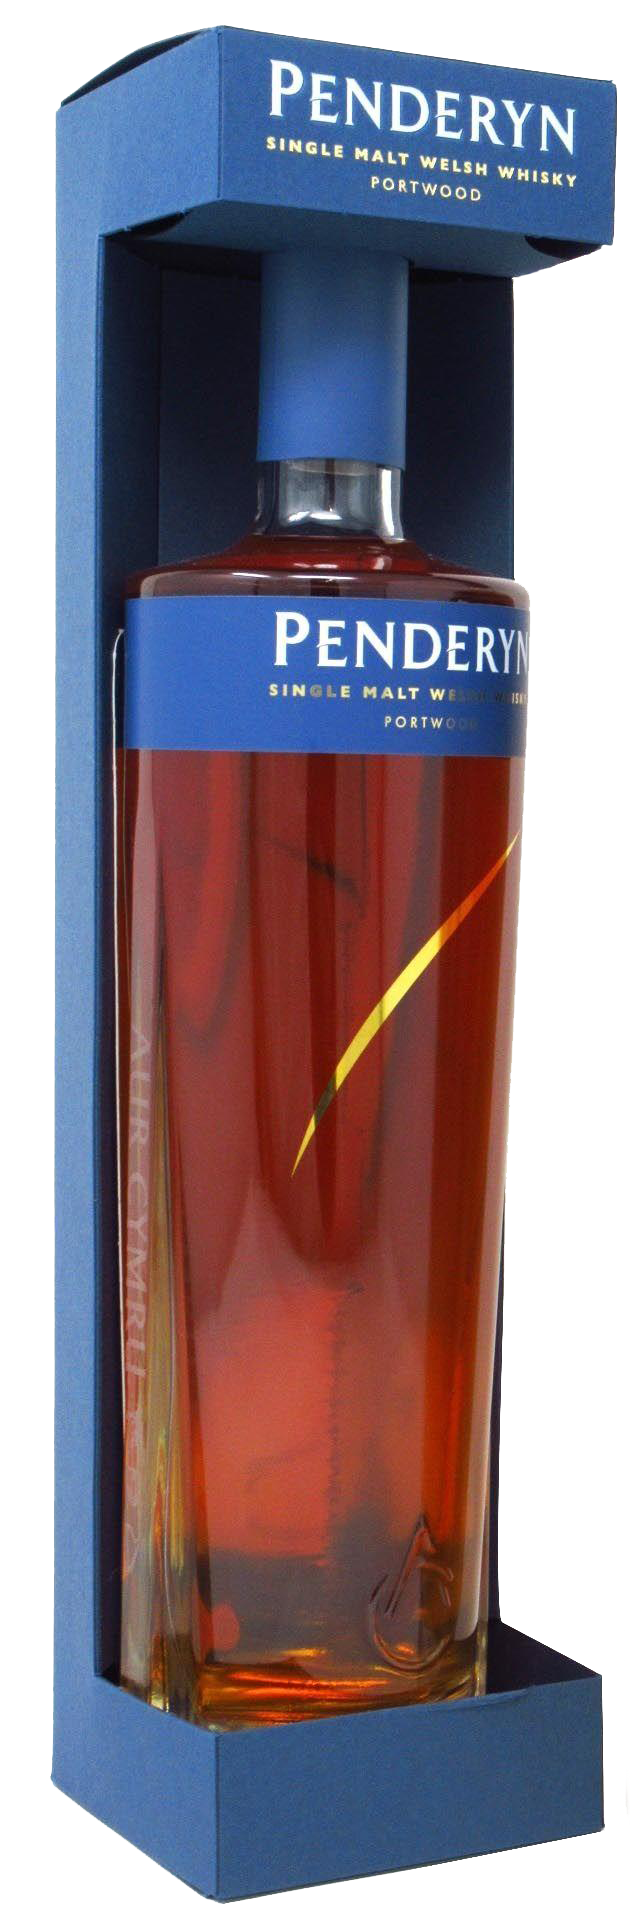 penderyn-portwood-finish+box